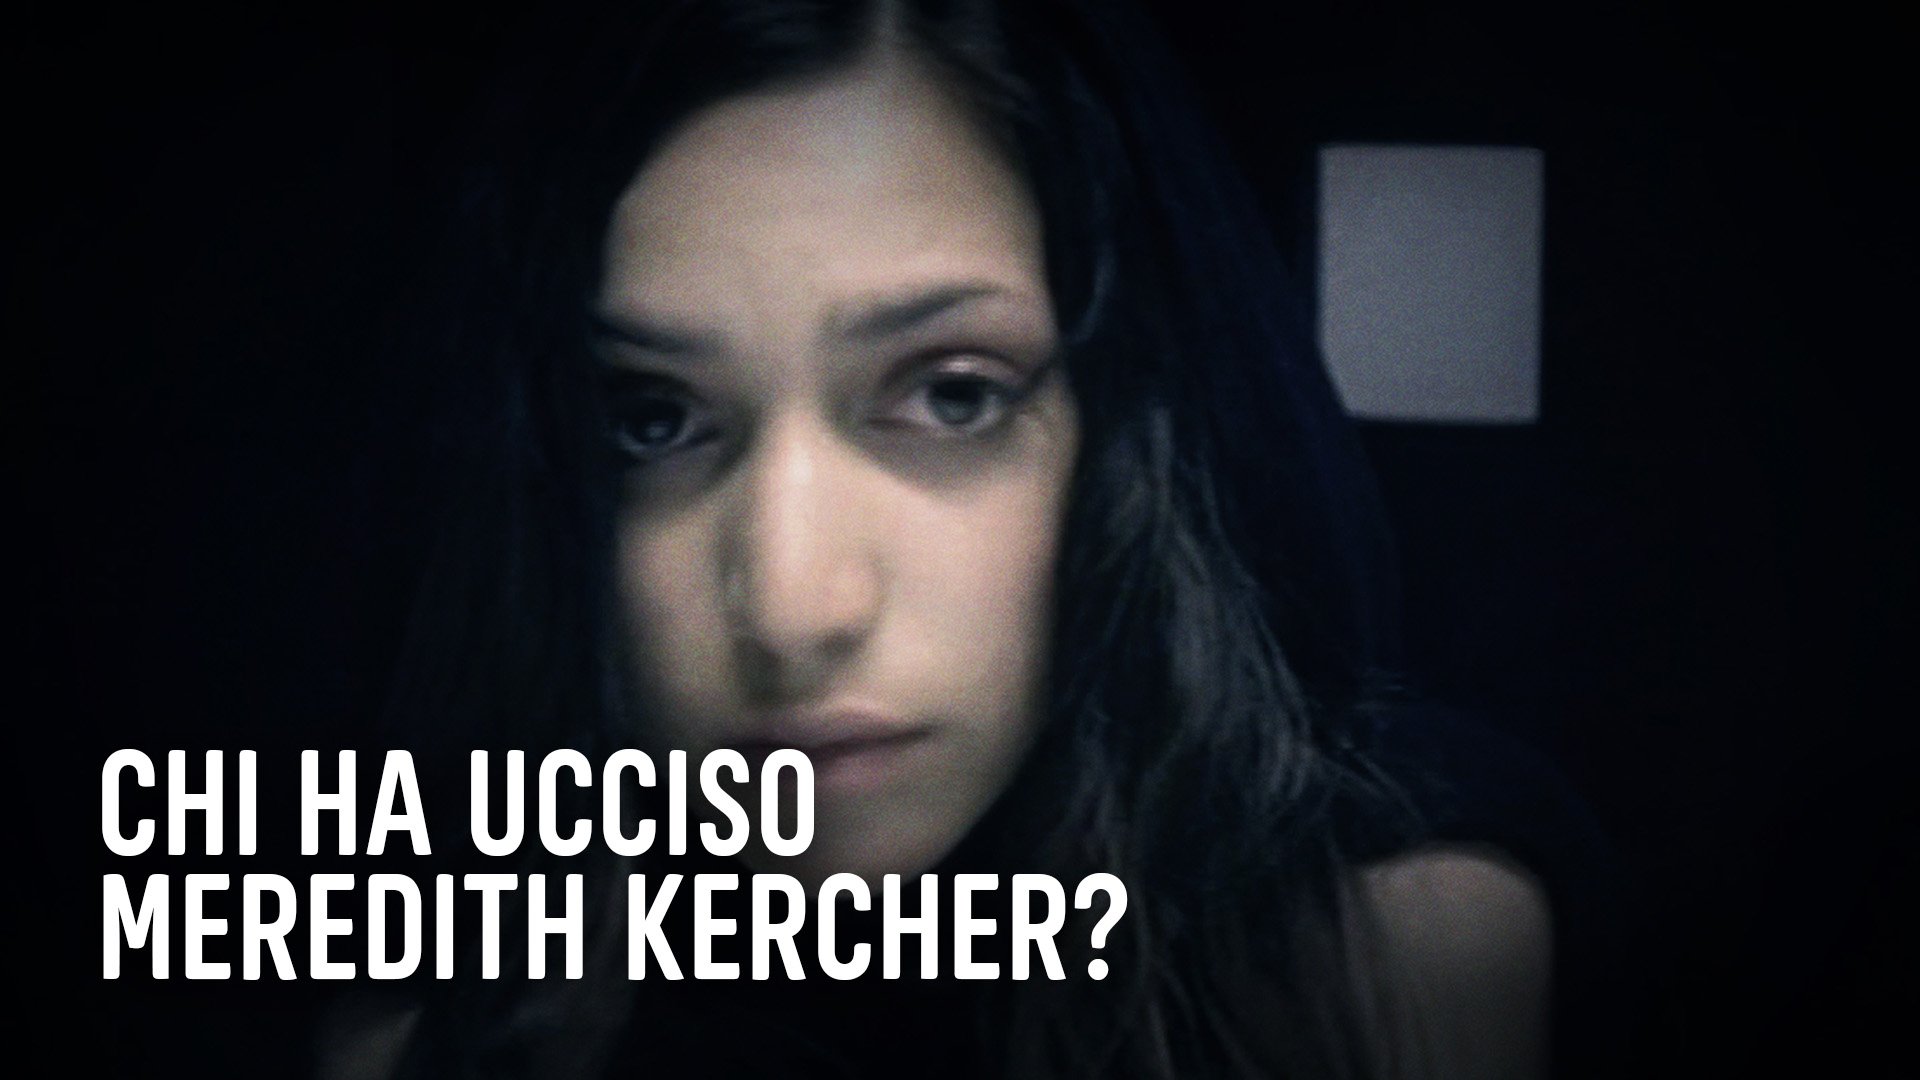 Chi ha ucciso Meredith Kercher? - Quootip